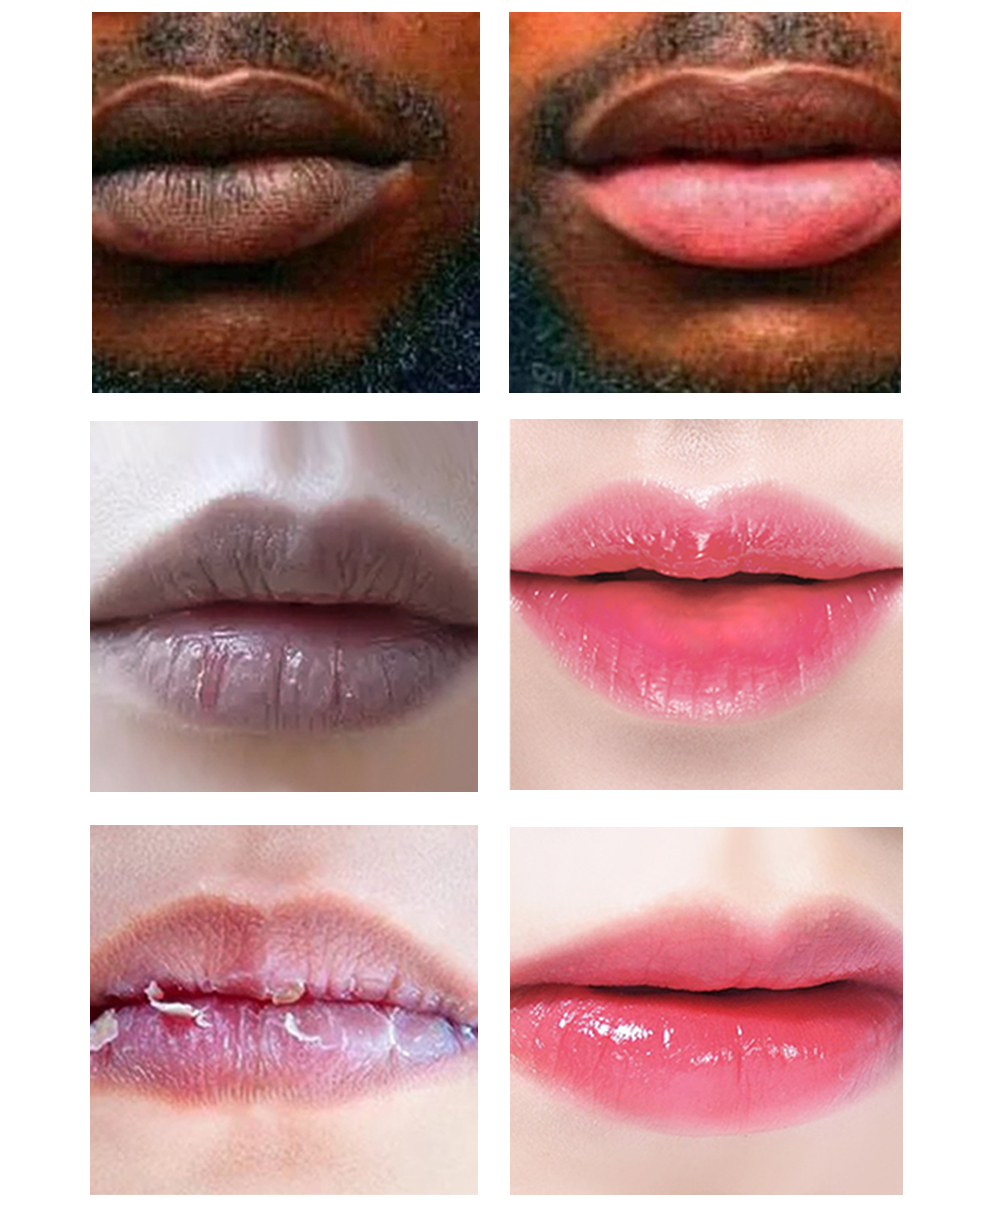 Lip Lightening Scrub Balm Remove Dull Lips Moisturizing Reduce Pigmentation Anti-Cracking